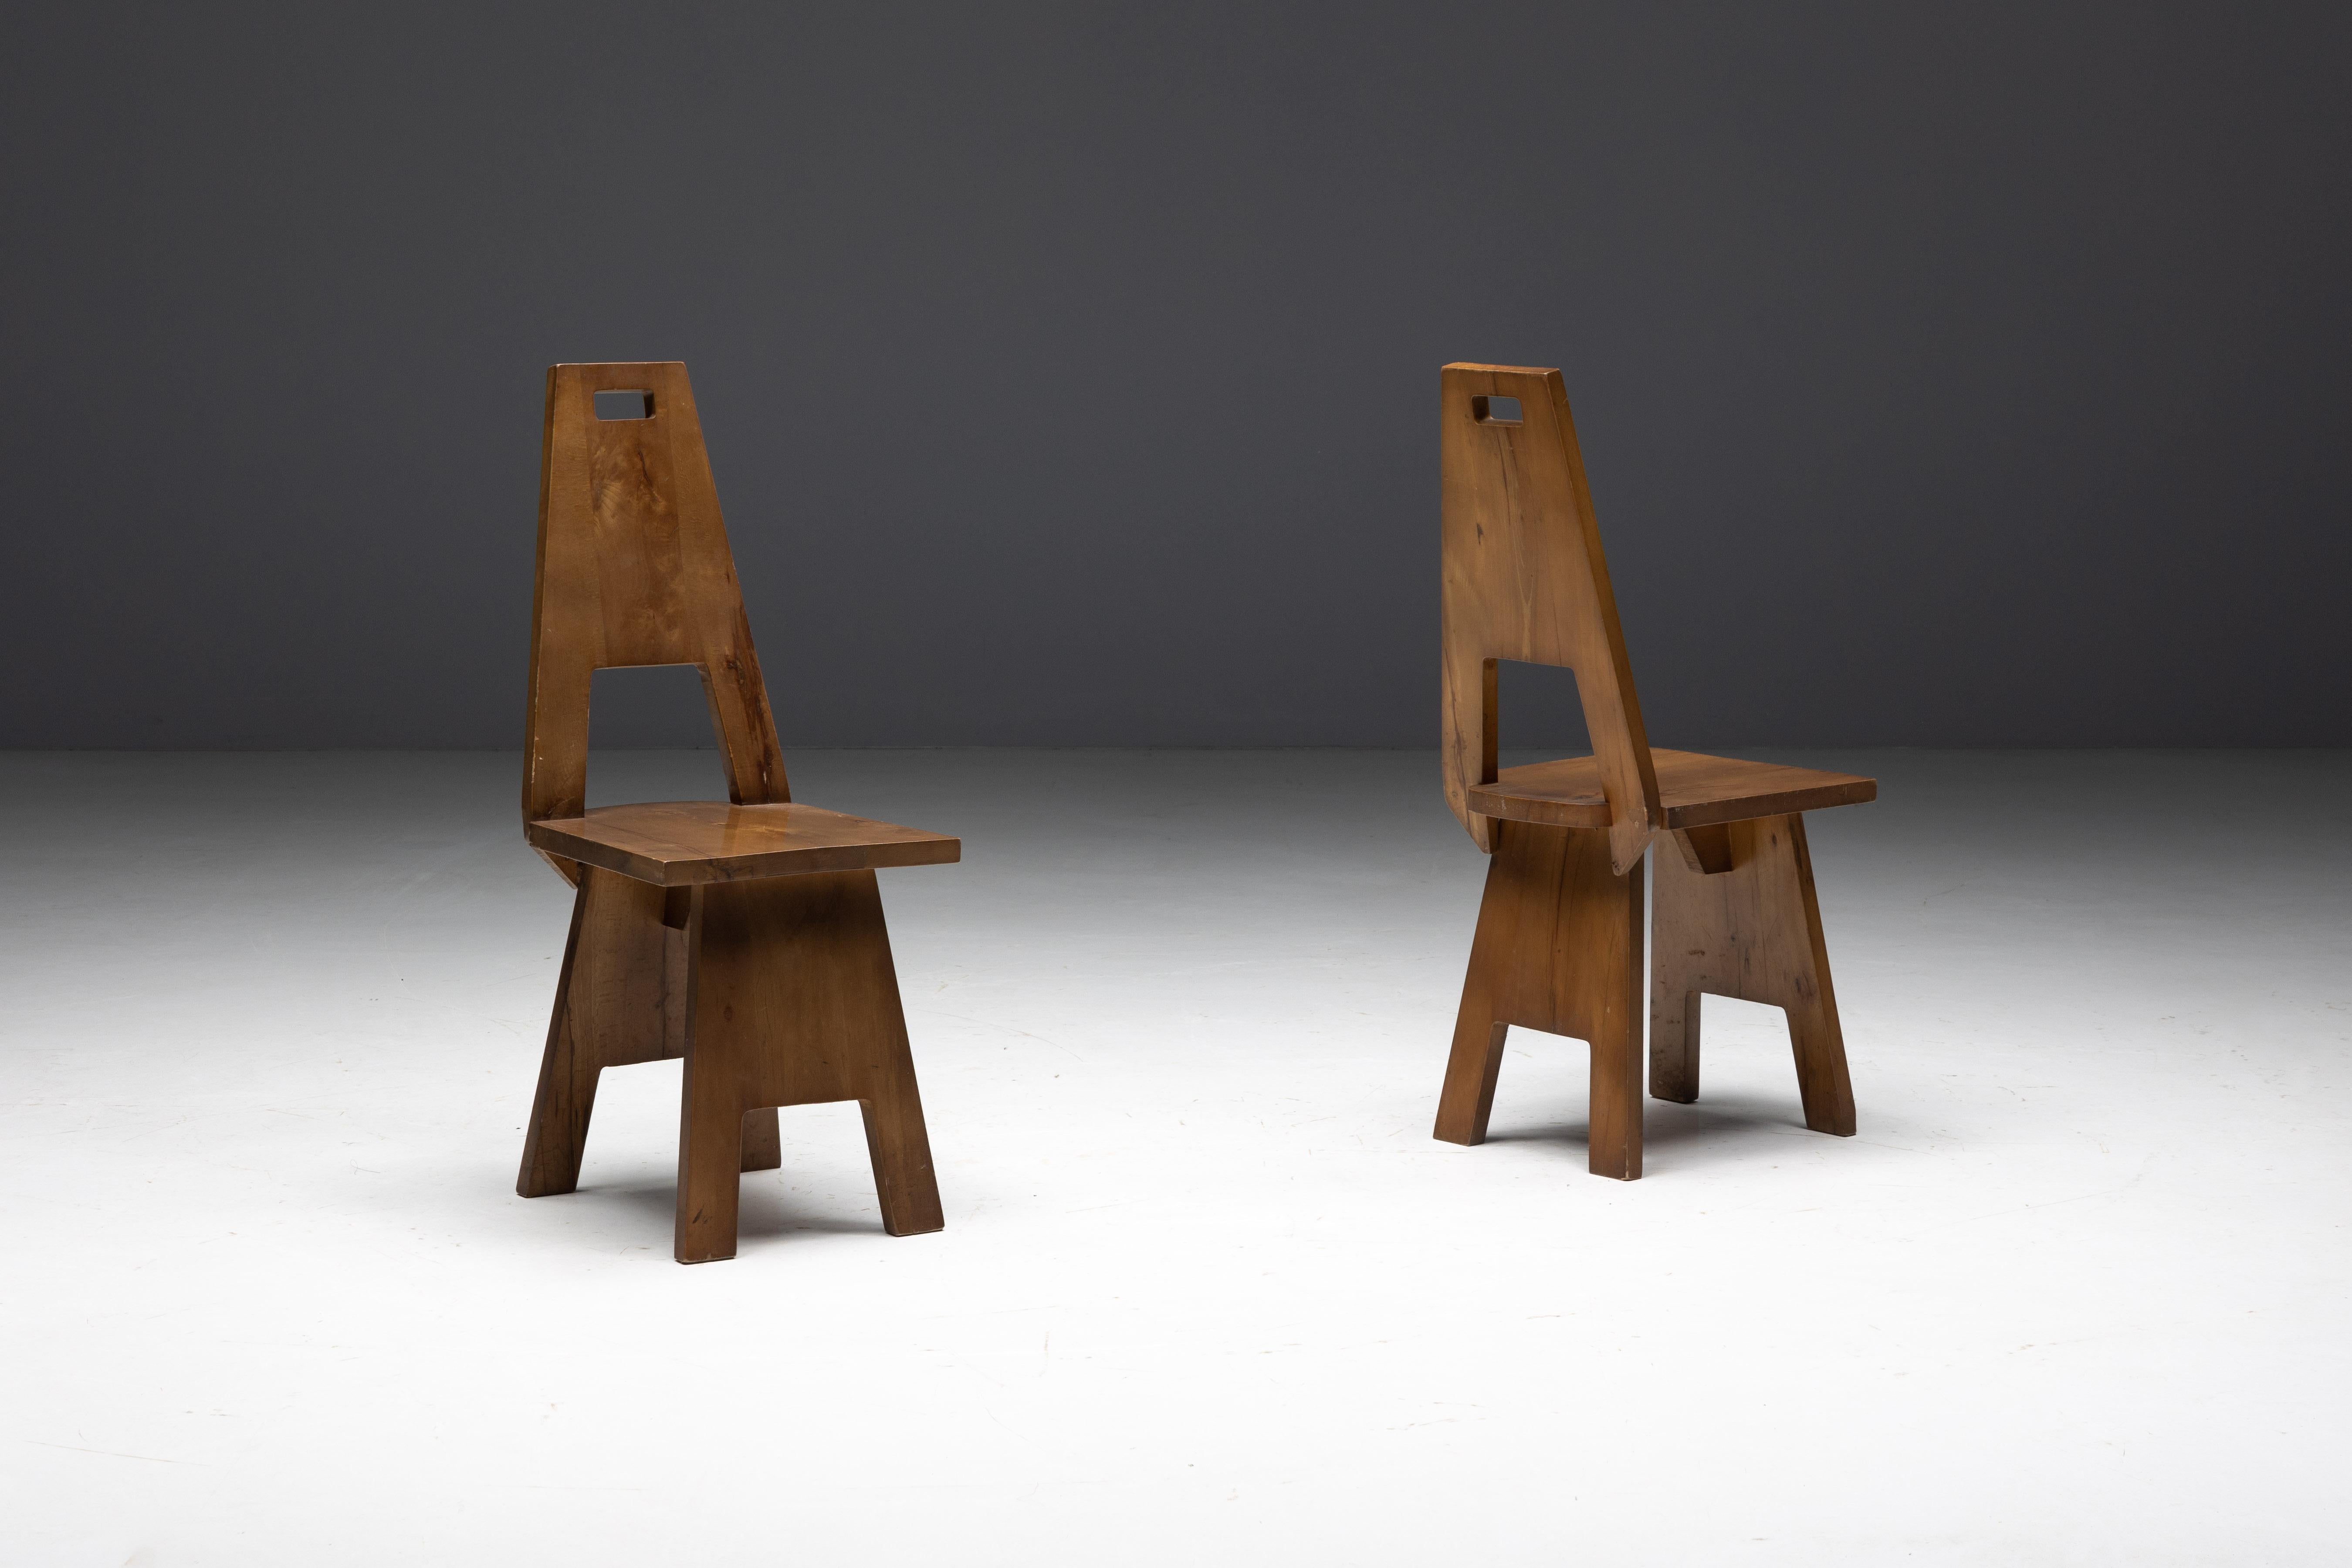 Sculptural Brutalist Wabi Sabi Chairs, Netherlands, 1960s For Sale 10